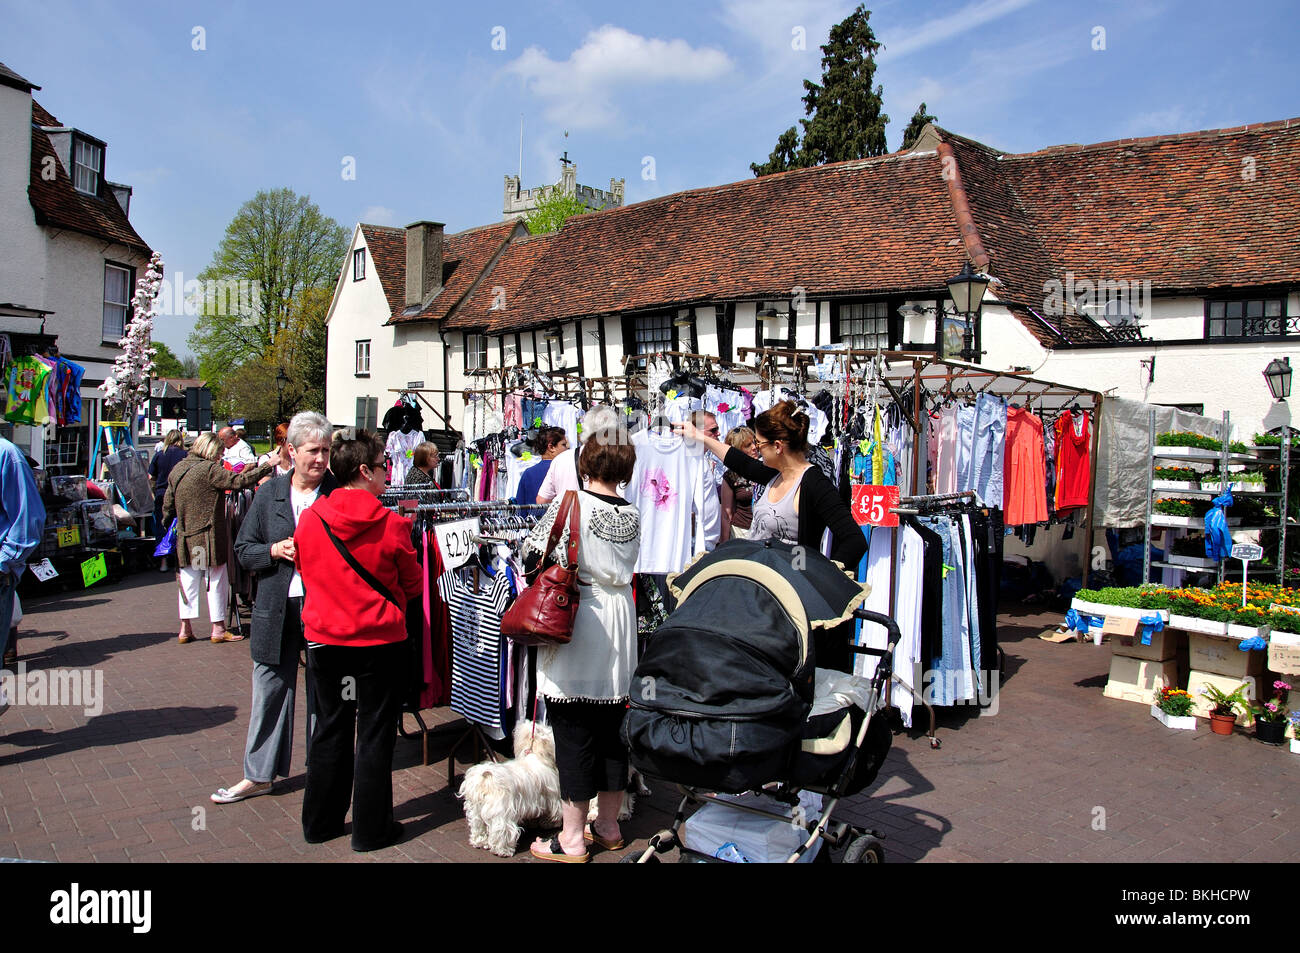 Charter Street Market, Market Place, Waltham Abbey, Essex, England, United Kingdom Stock Photo